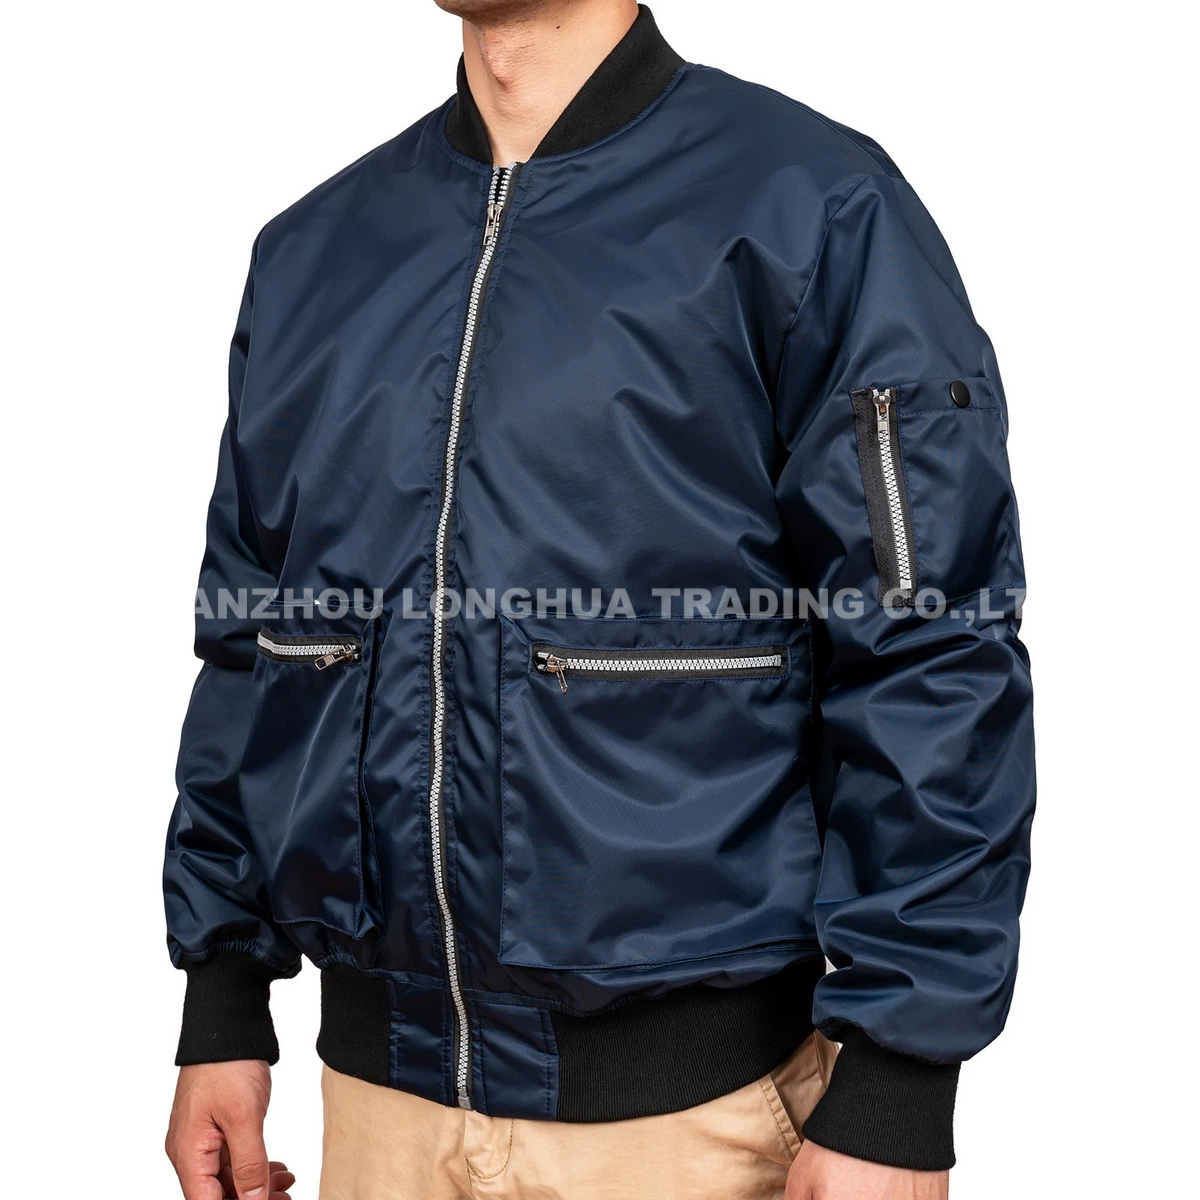 Men Jacket Boy New Nylon with Padding Apparel Winter Coat Fashion Clothes Outdoor Clothing